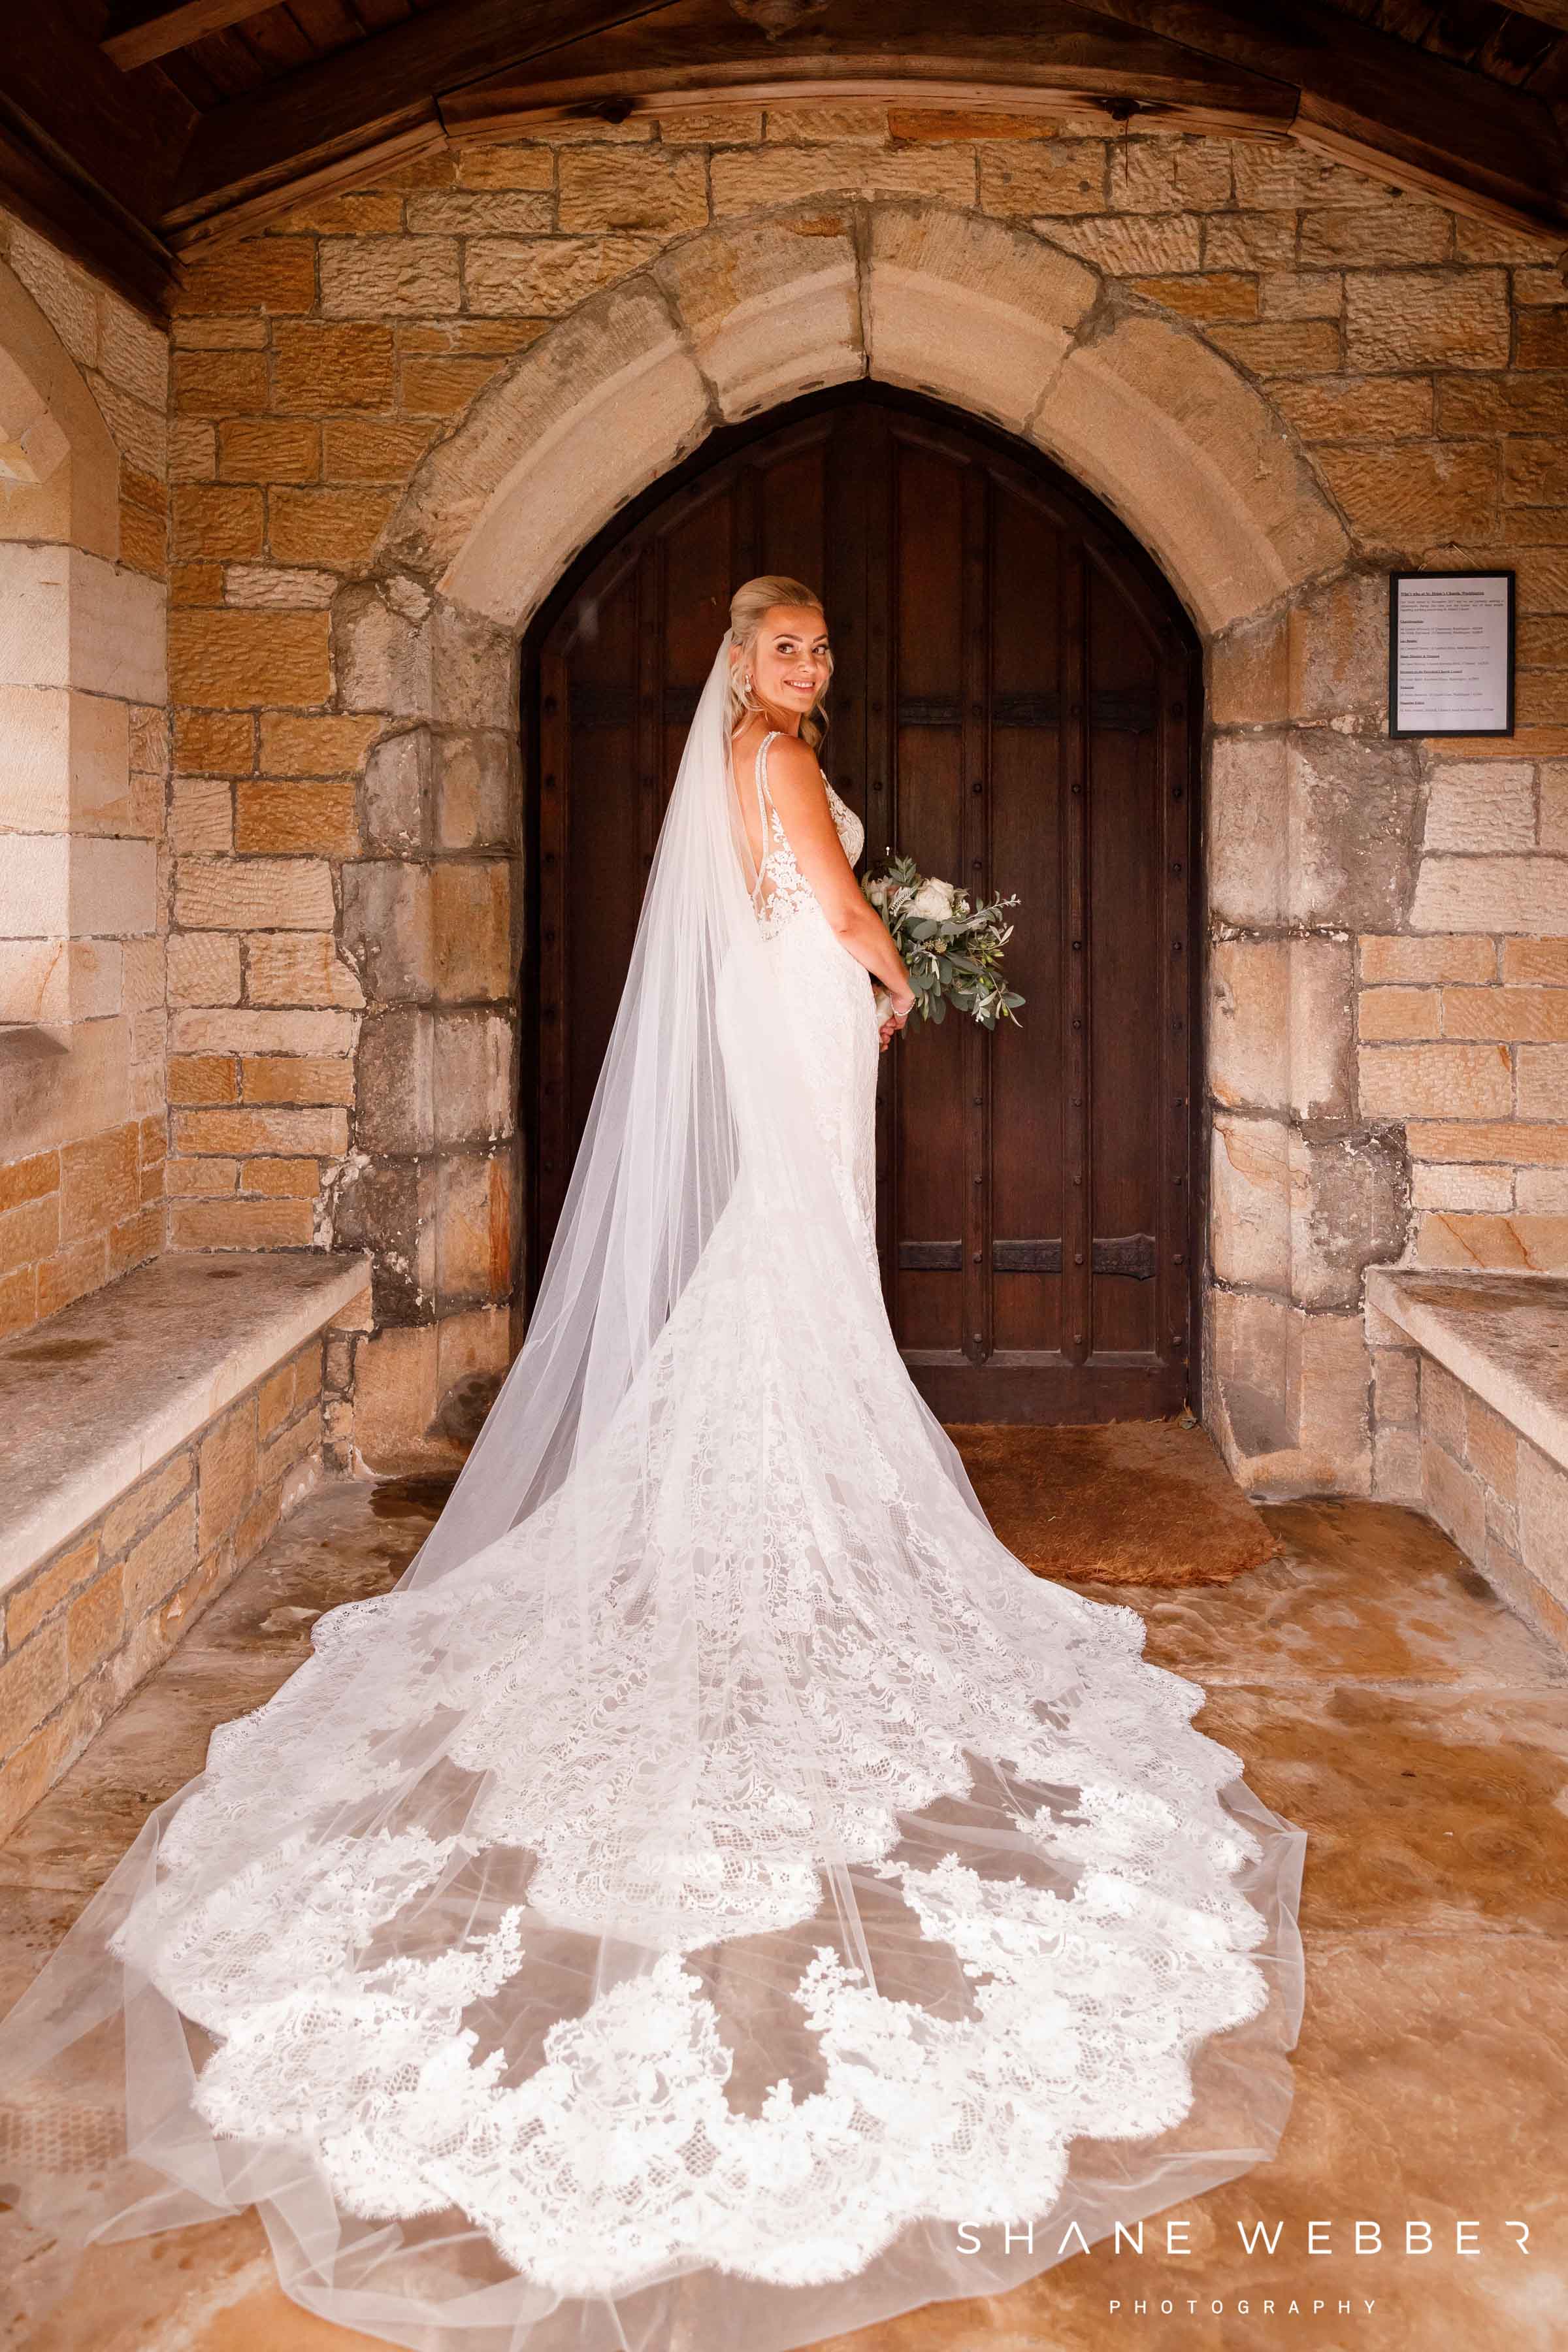 Enzoani bridal gown photo browsholme hall